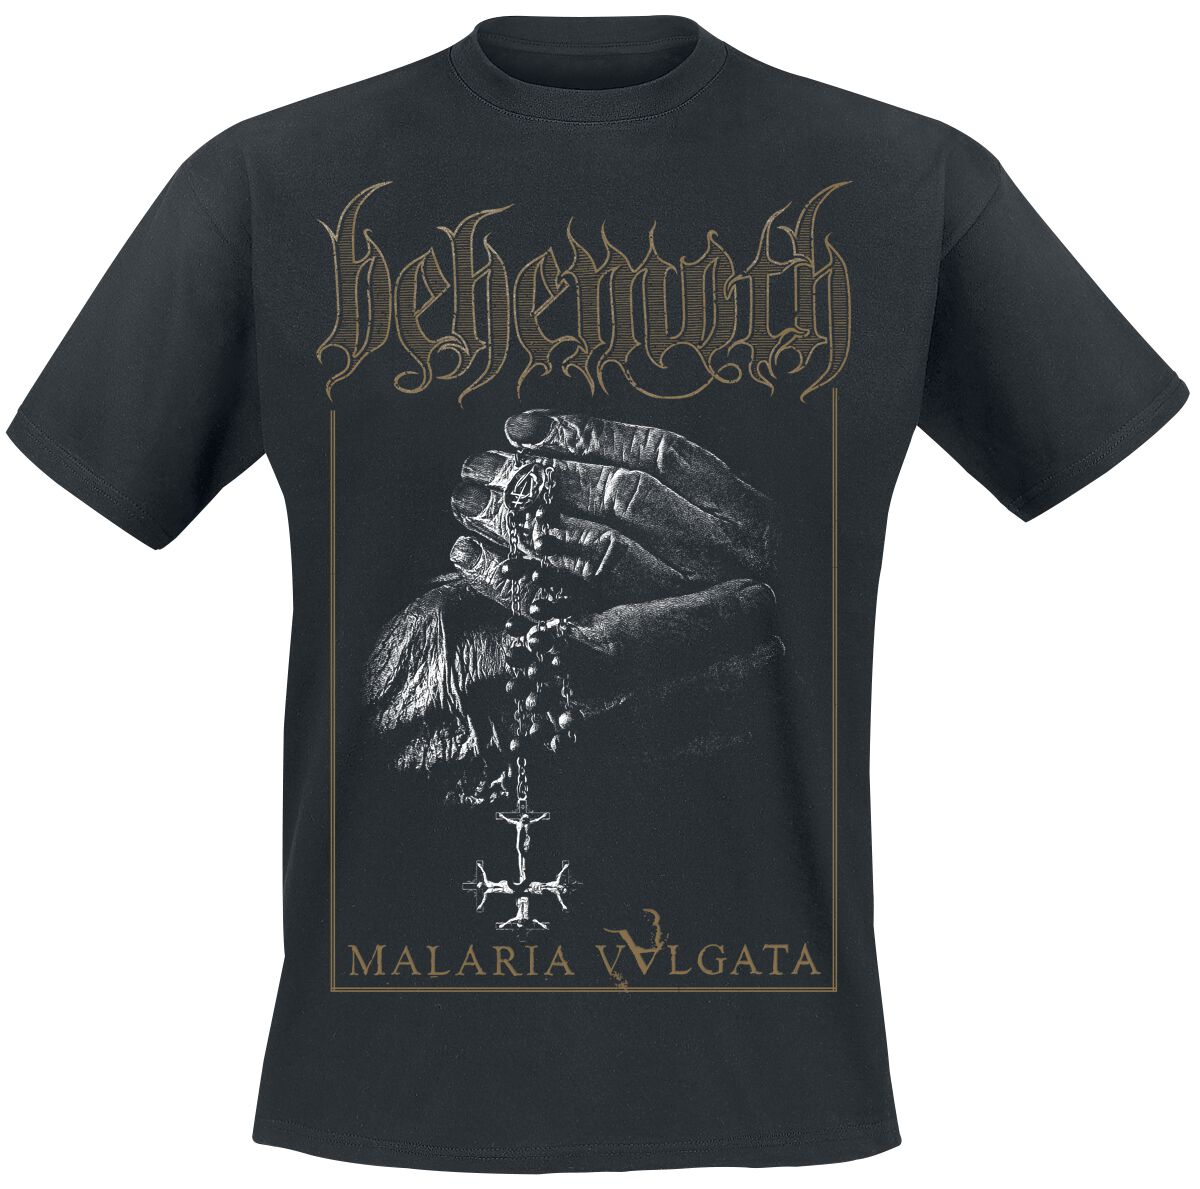 Behemoth Malaria Vvlgata T-Shirt schwarz in S